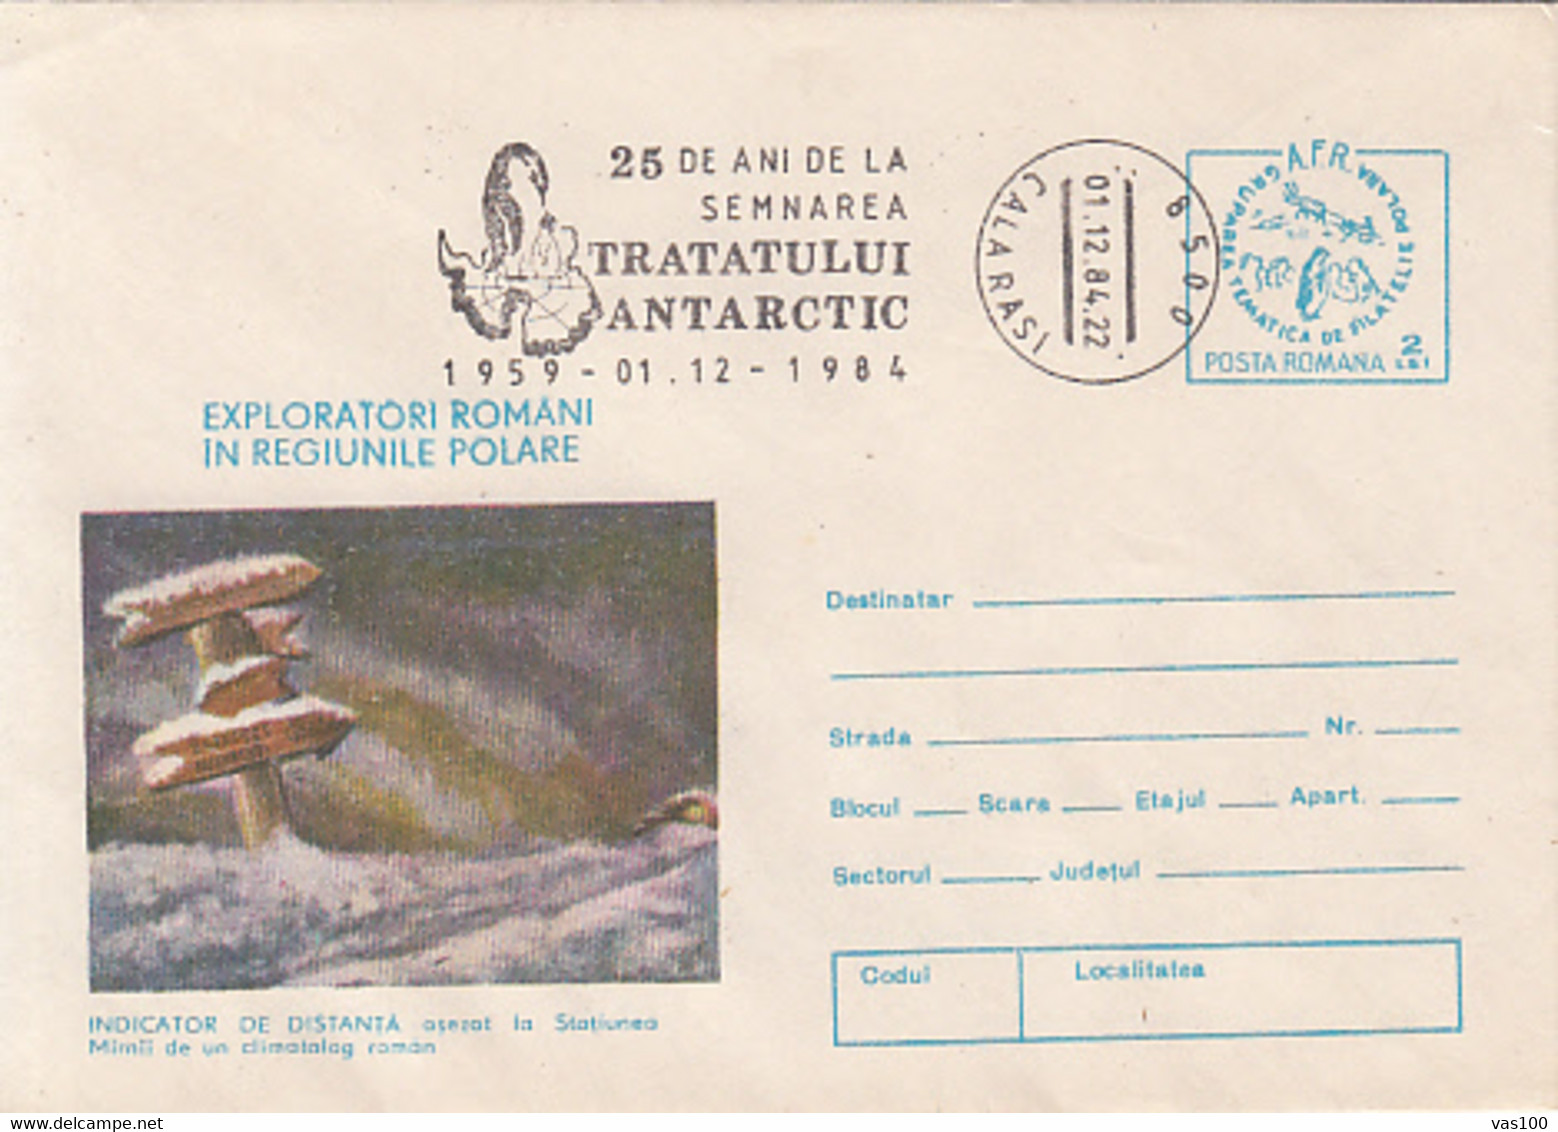 SOUTH POLE, ANTARCTIC TREATY SPECIAL POSTMARK, ANTARCTIC LANDSCAPE, COVER STATIONERY, ENTIER POSTAL, 1984, ROMANIA - Tratado Antártico